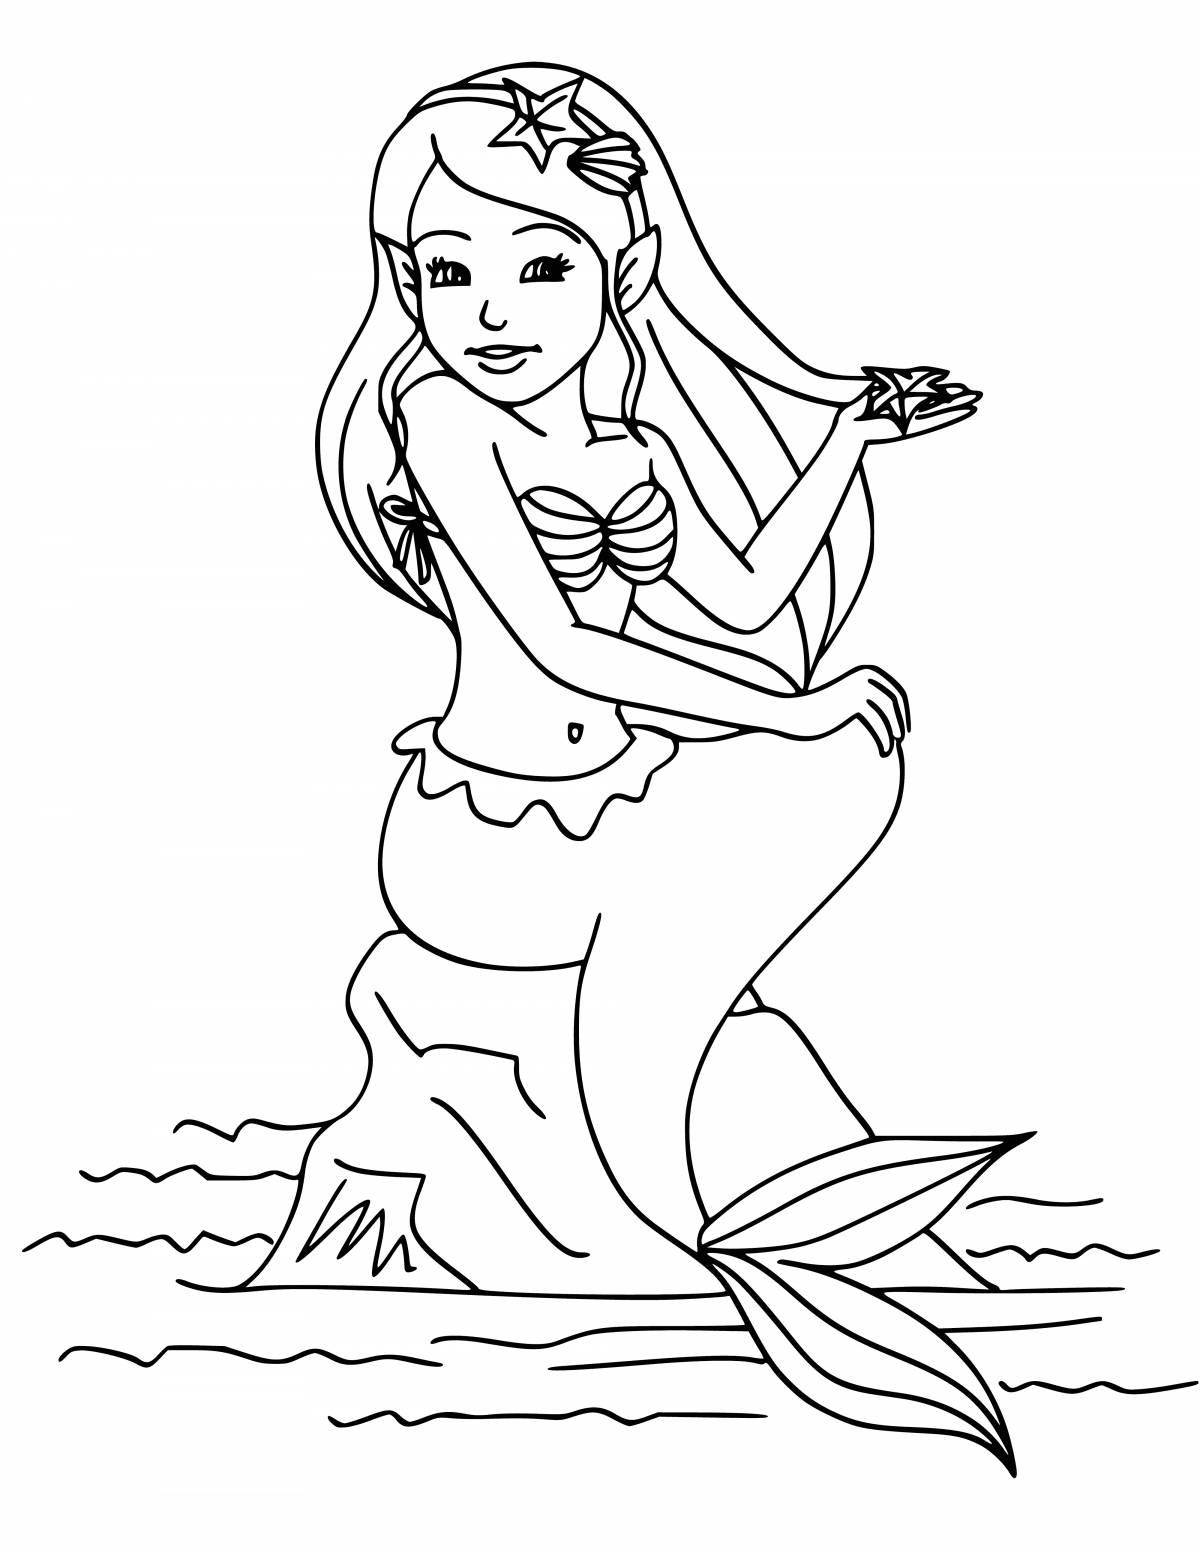 Joyful coloring mermaid for children 3-4 years old